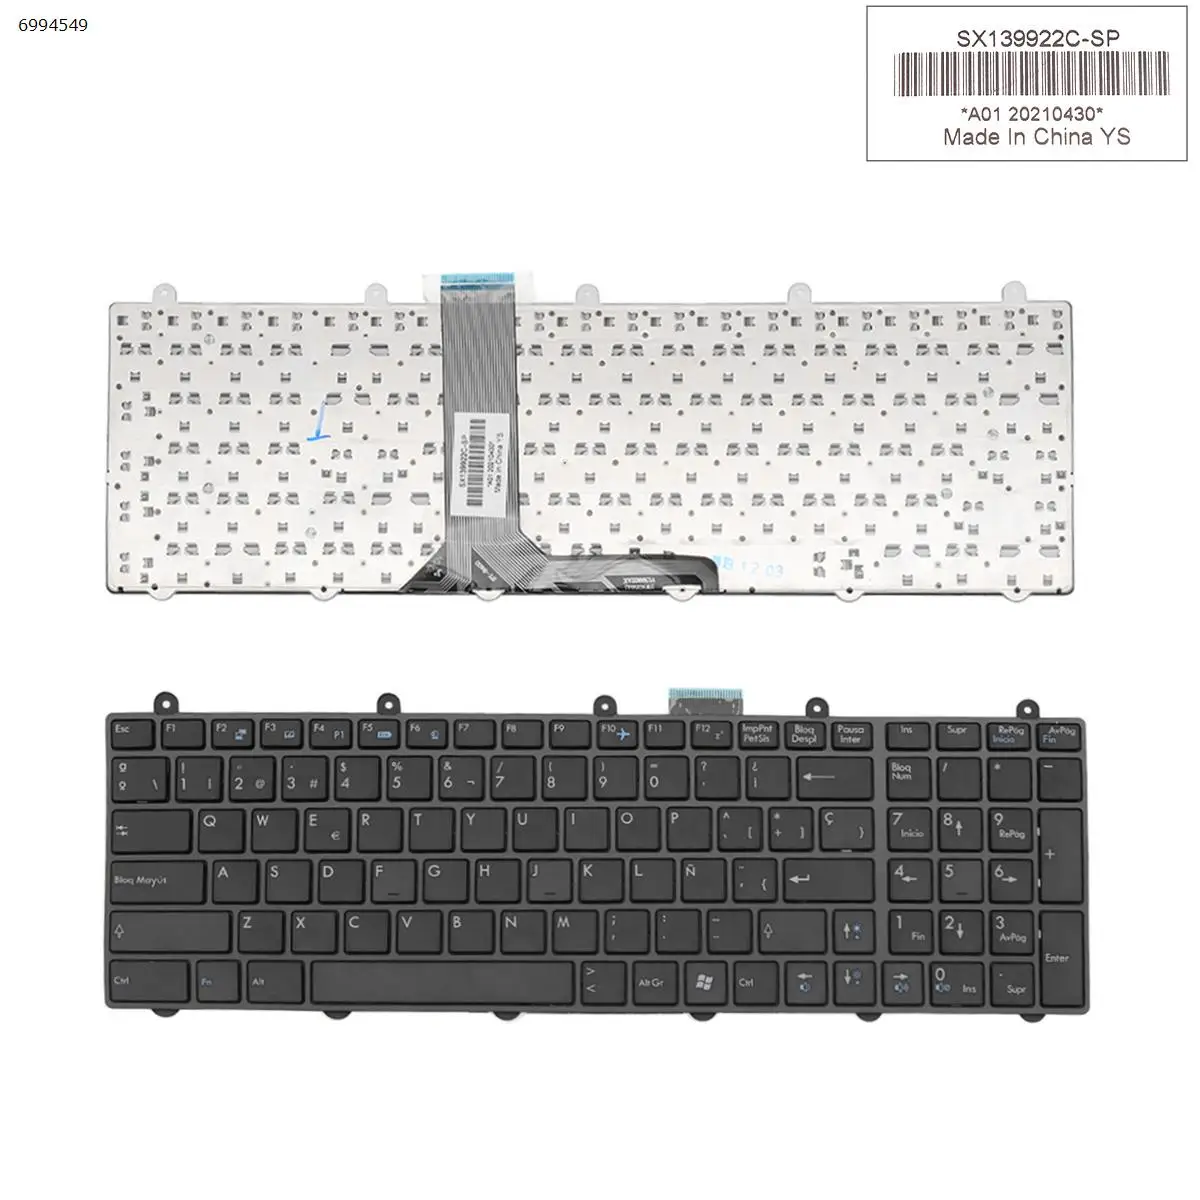 

New Spanish SP Laptop Keyboard for MSI GT60 GT70 GT780 GT783 GX780 SWN259A1 V139922AK BLACK FRAME BLACK Without Backlit